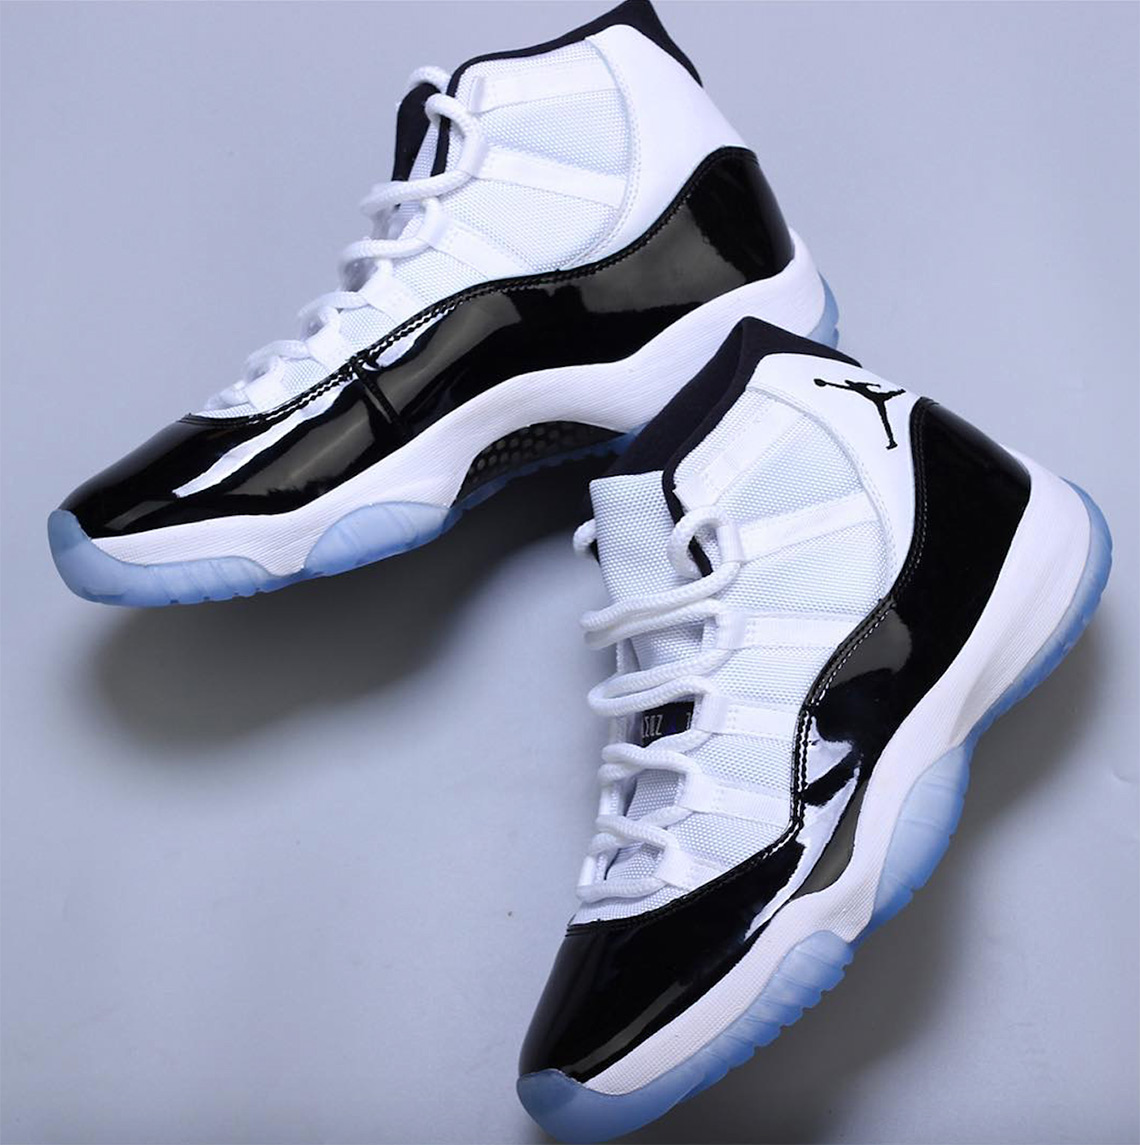 Jordan 11 Concord 2018 - Photos + Release Info | SneakerNews.com